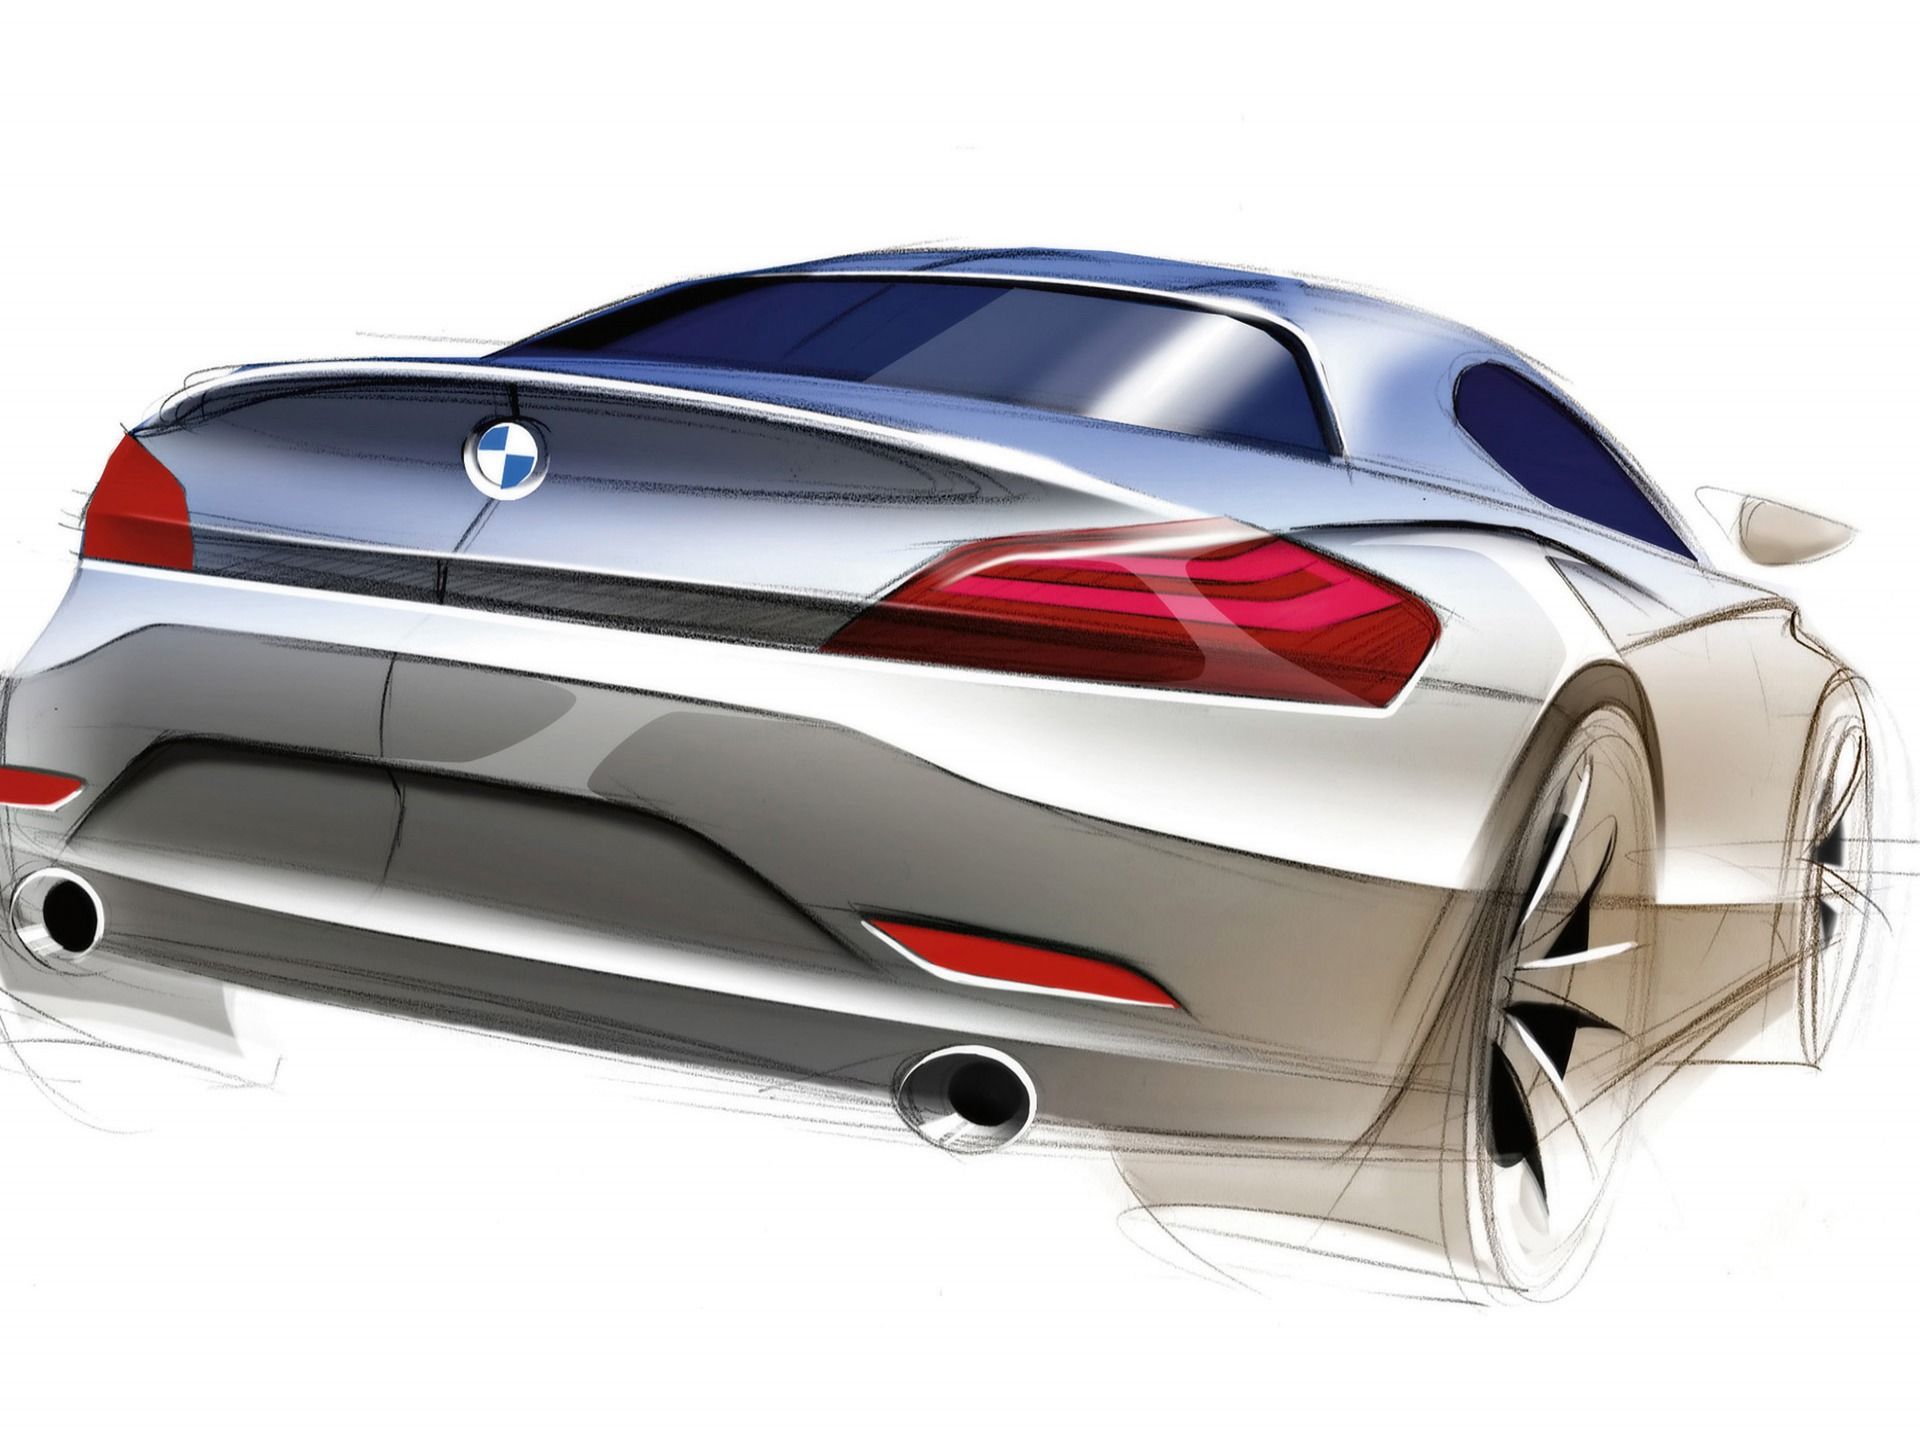 BMW Z4 Roadster Sketch Wallpaper BMW Cars Wallpaper in jpg format for free download